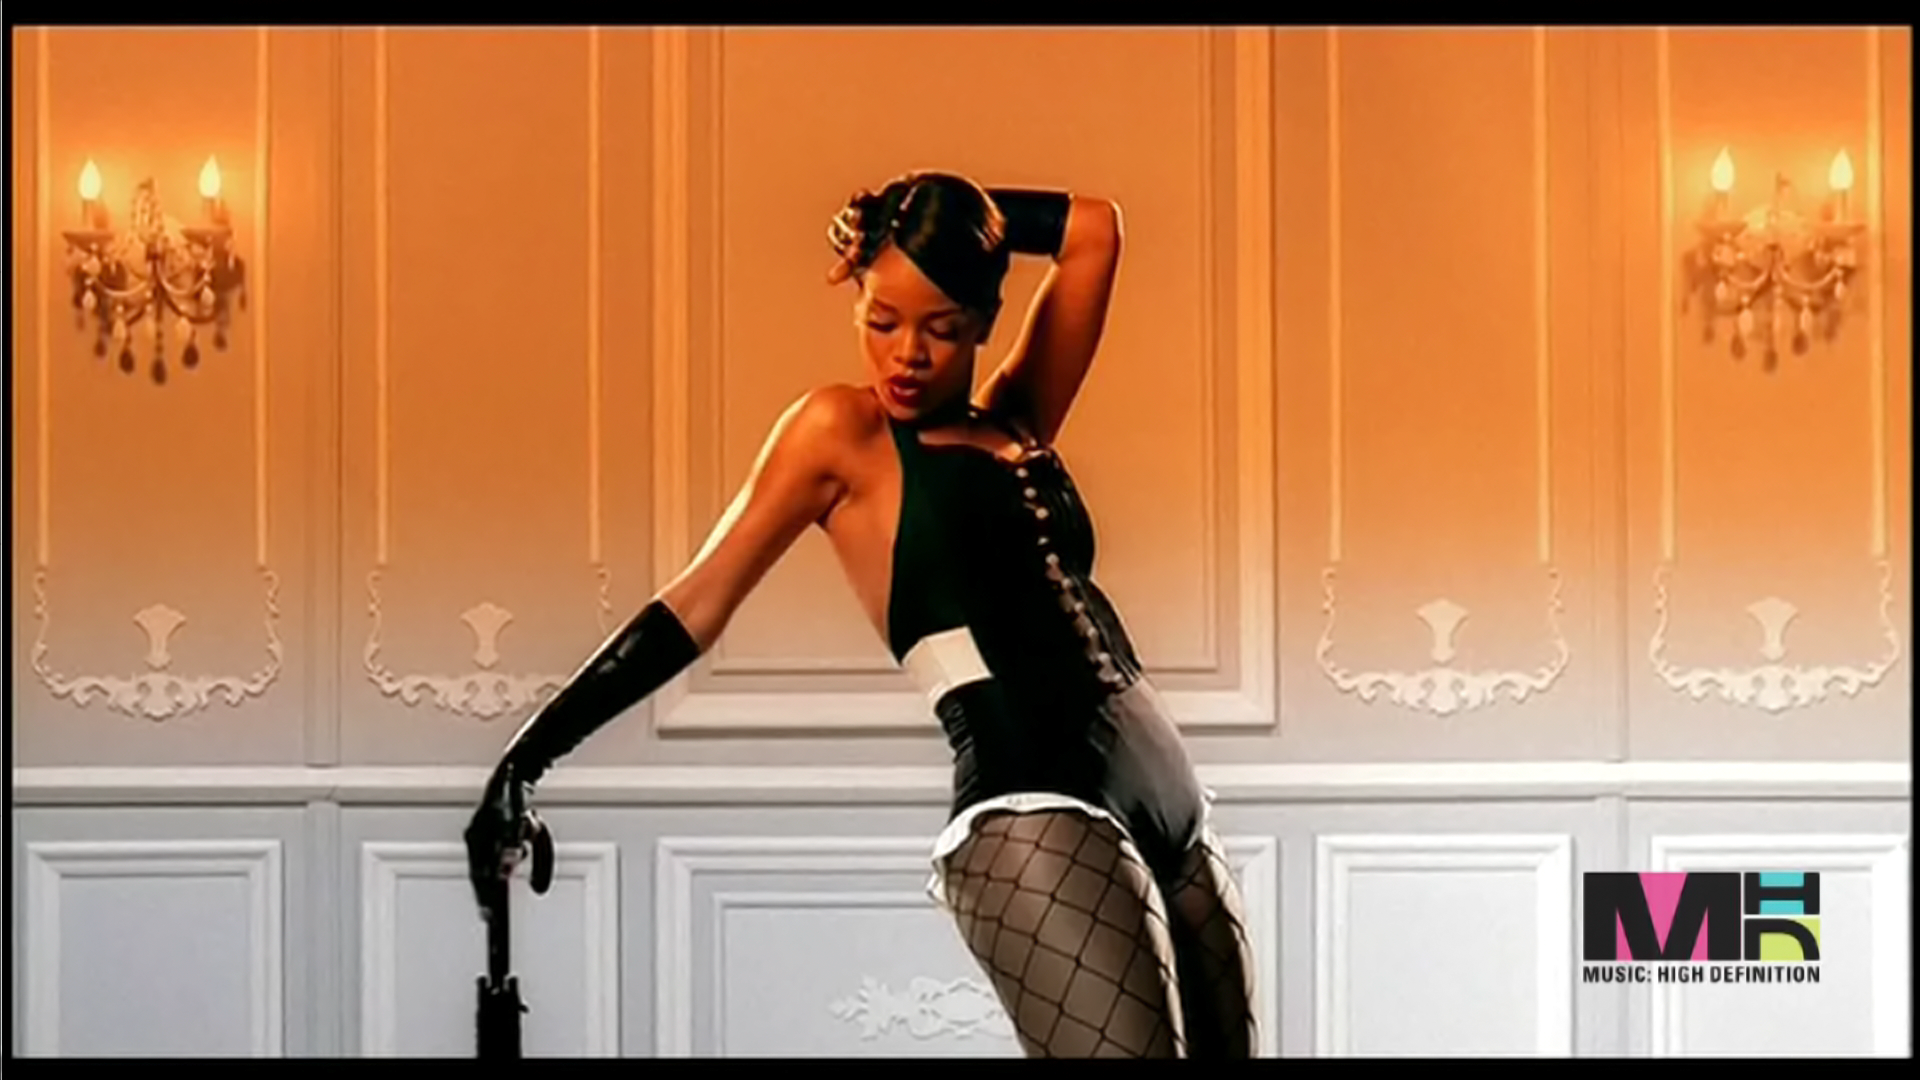 Rihanna ― Umbrella HD - Lady Gaga and Rihanna Image (22554916) - Fanpop